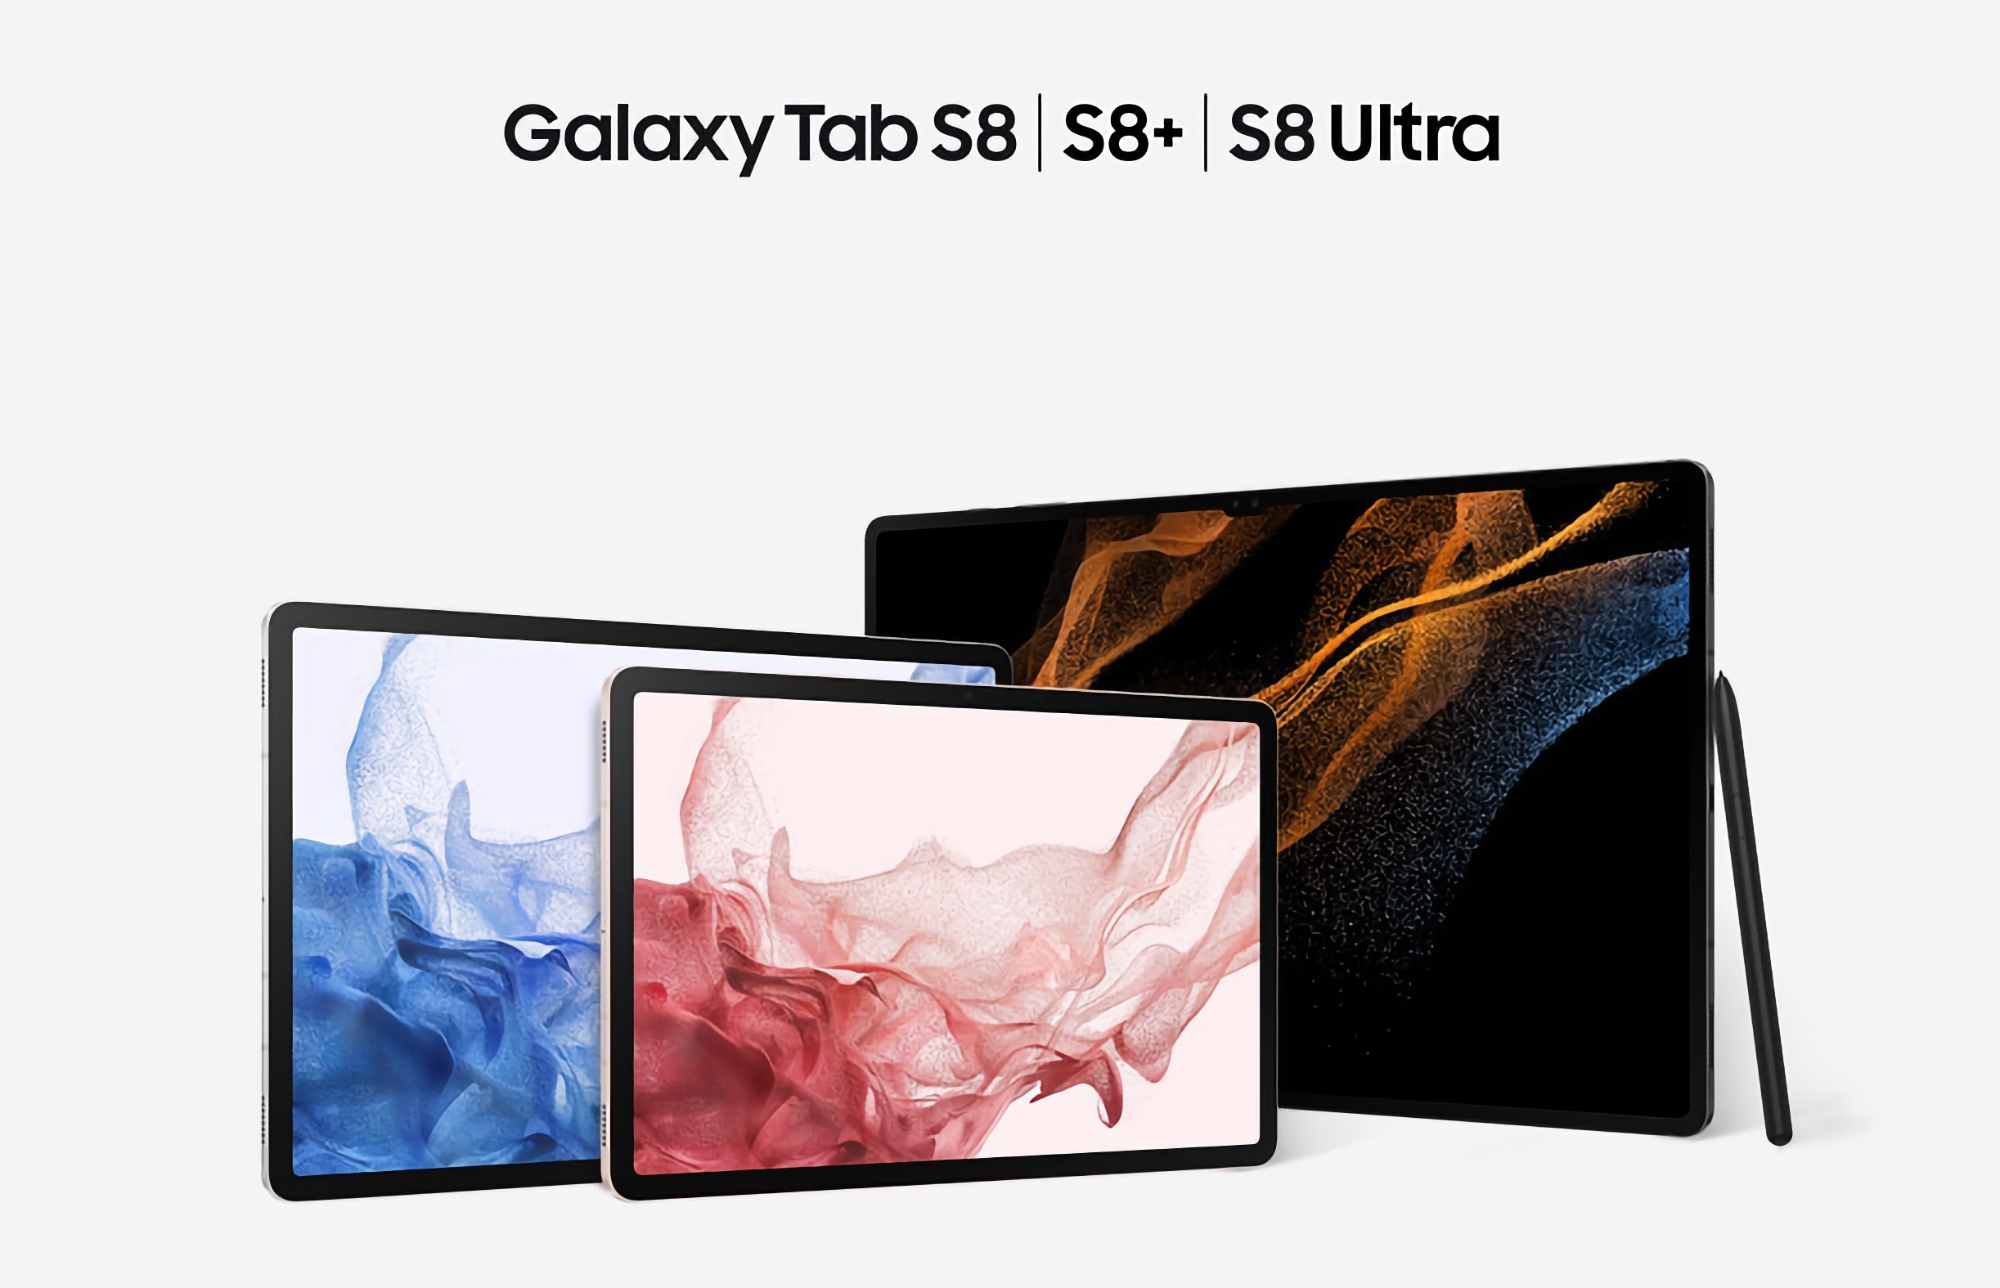 Samsung Galaxy Tab S8, Galaxy Tab S8+ und Galaxy Tab S8 Ultra erhalten ab sofort das Android 12L Update